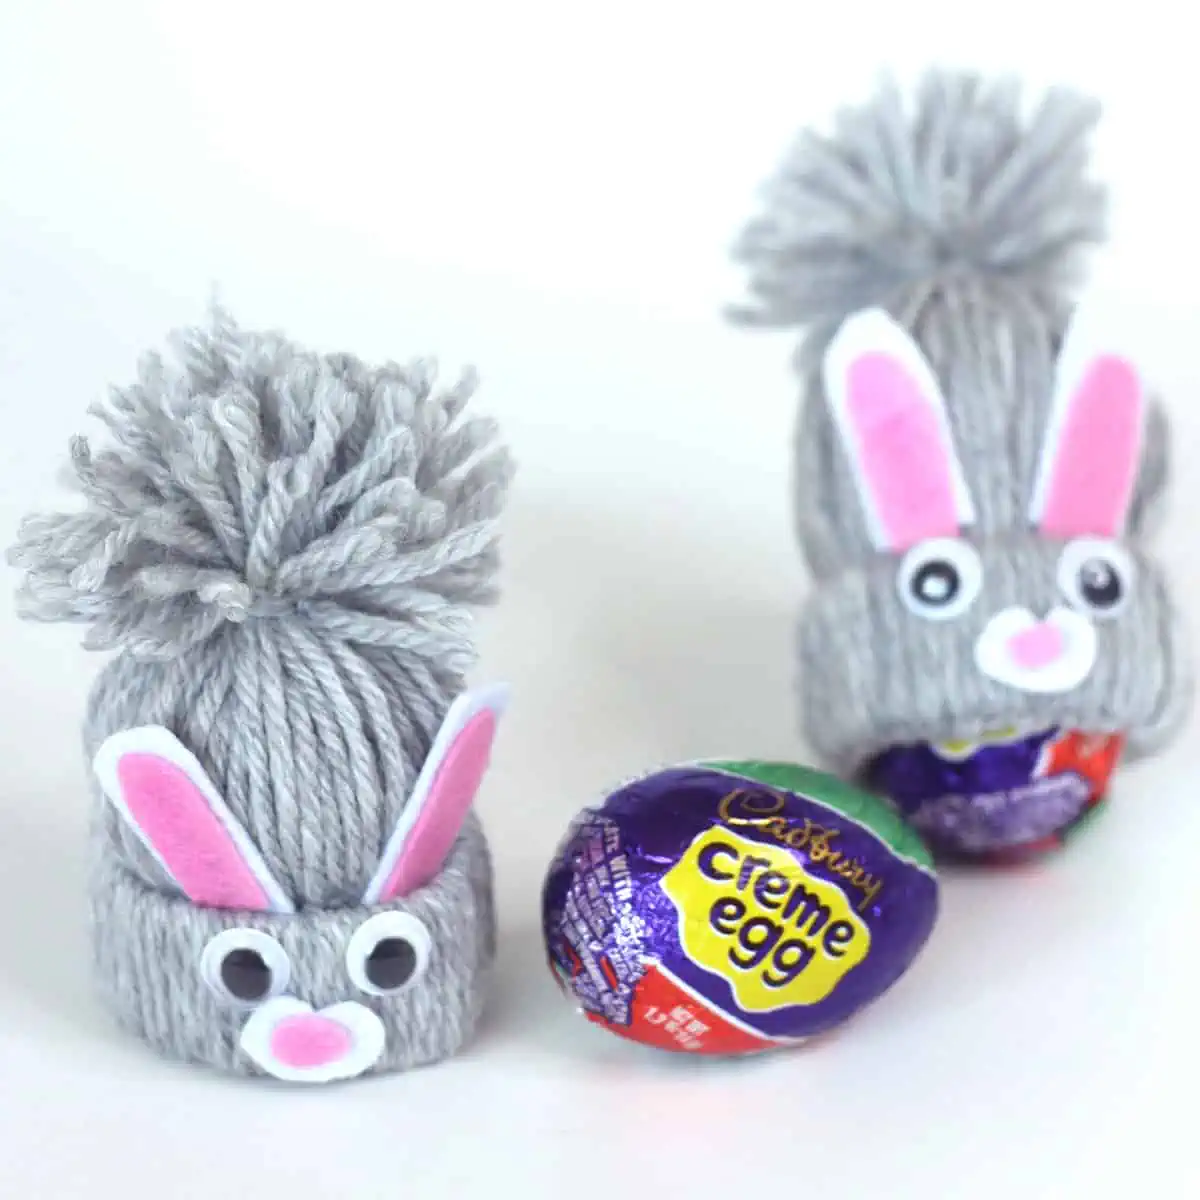 Yarn craft bunnies with a Cadbury creme egg.